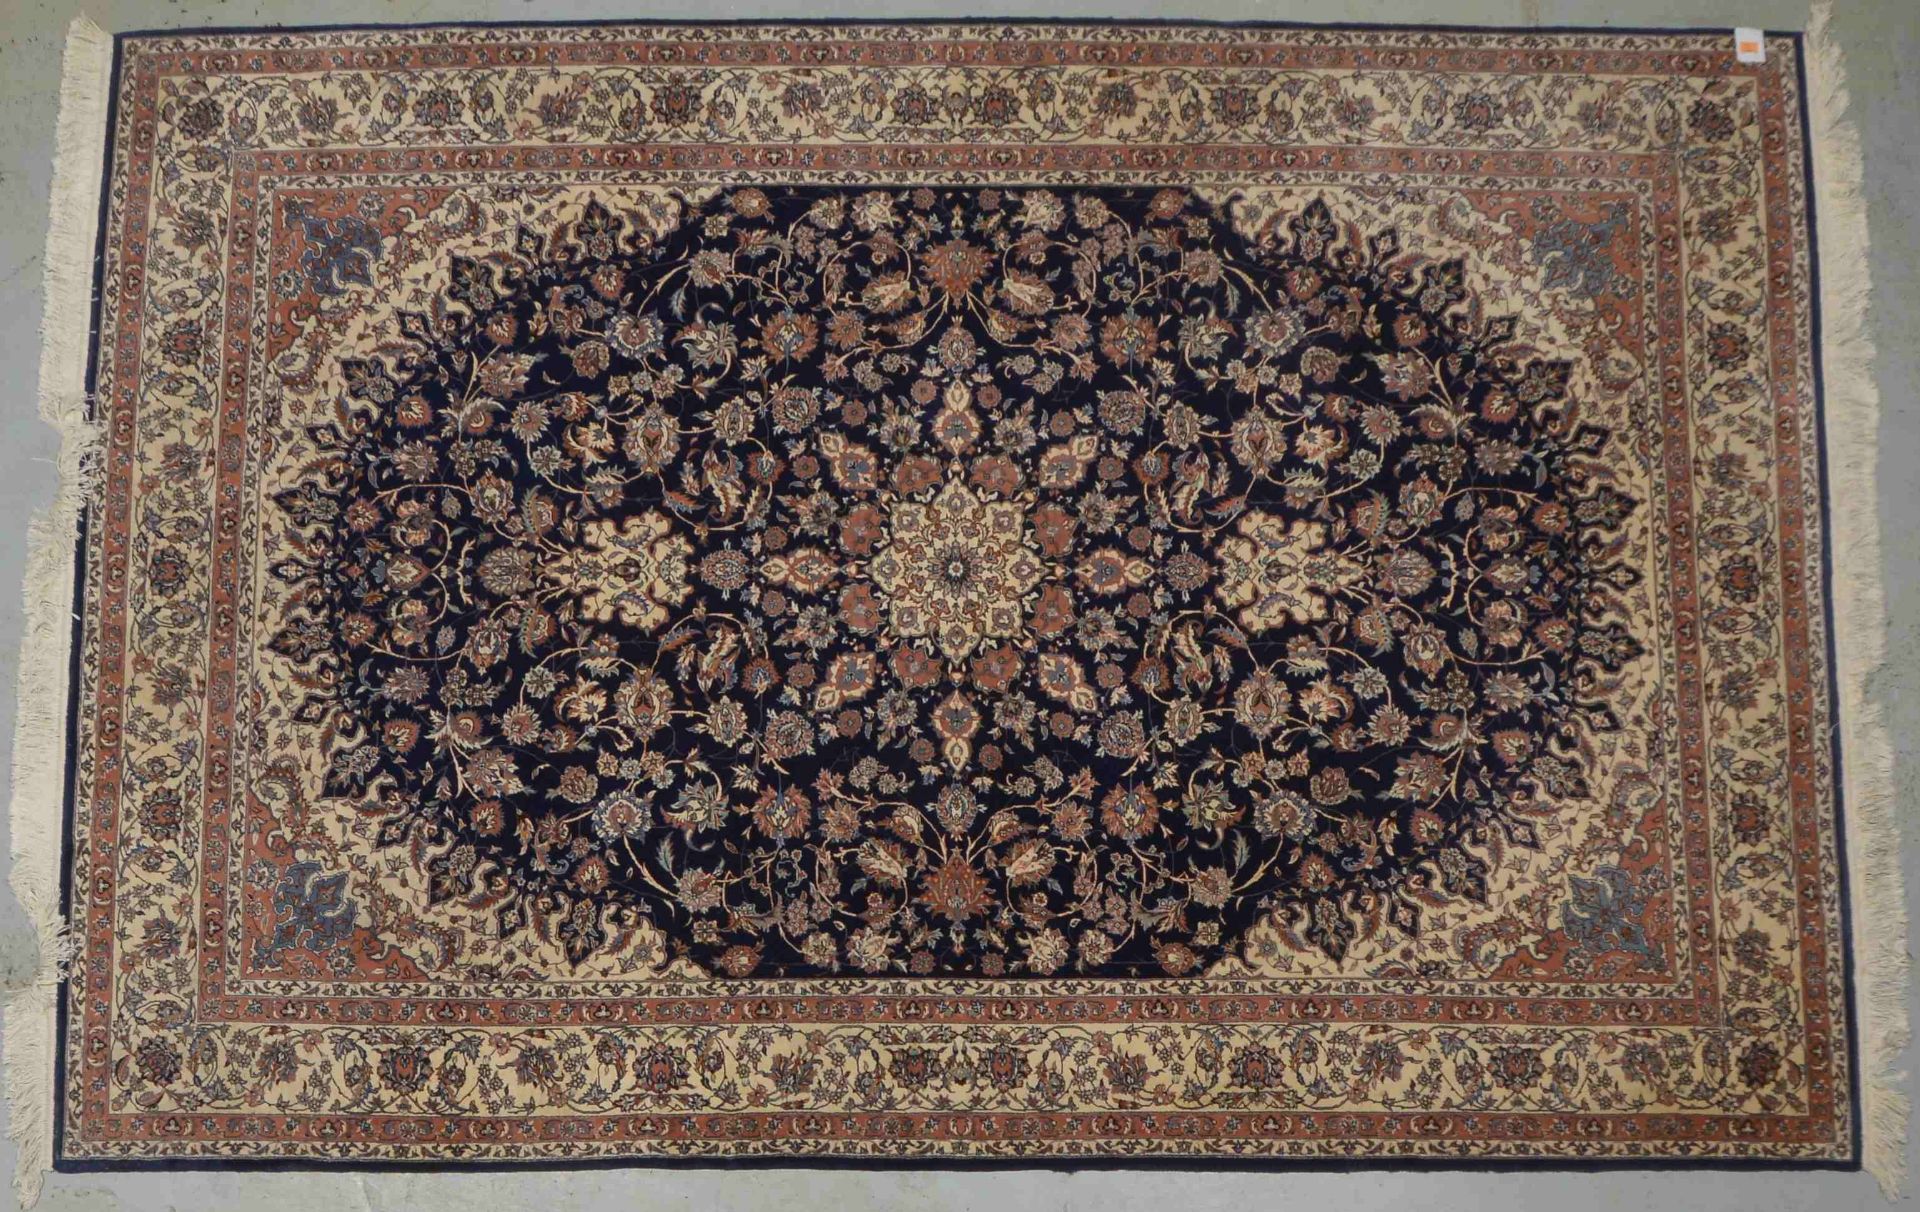 Isfahan (China?), Korkwolle, sehr feine Knüpfung, ca. 650.000 Knoten/qm, komplett, Flor in gutem Zu